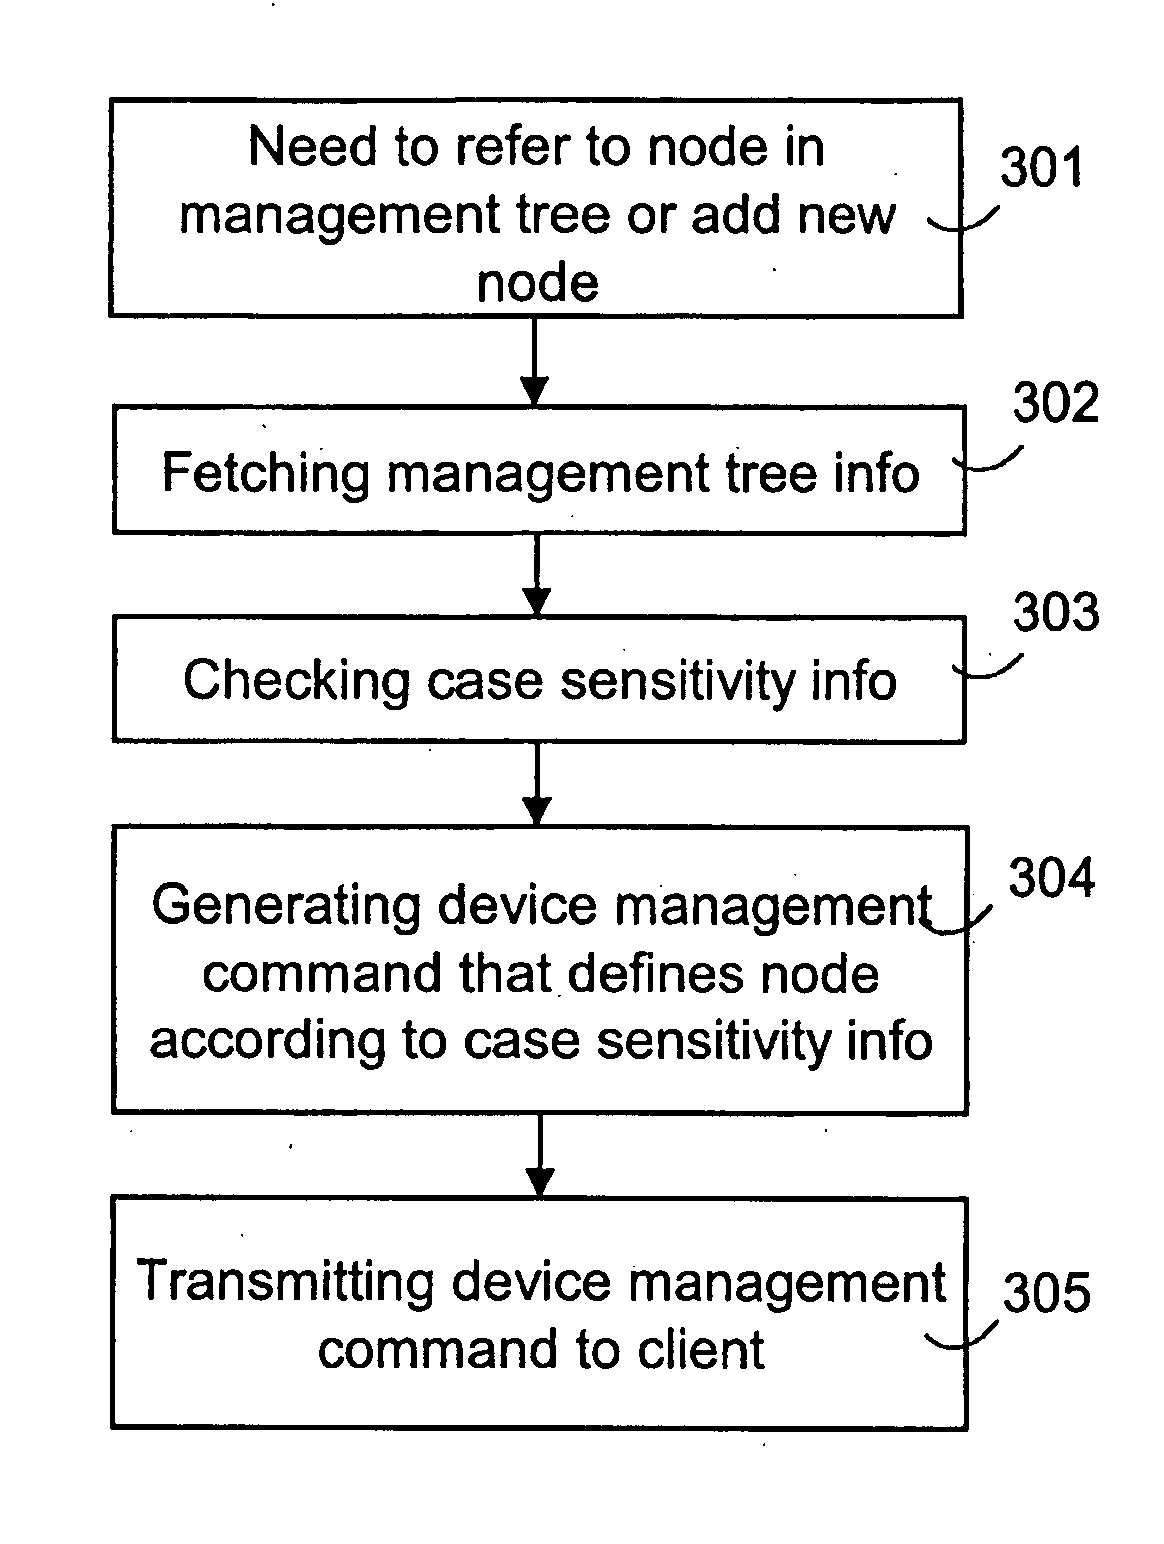 Defining nodes in device management system